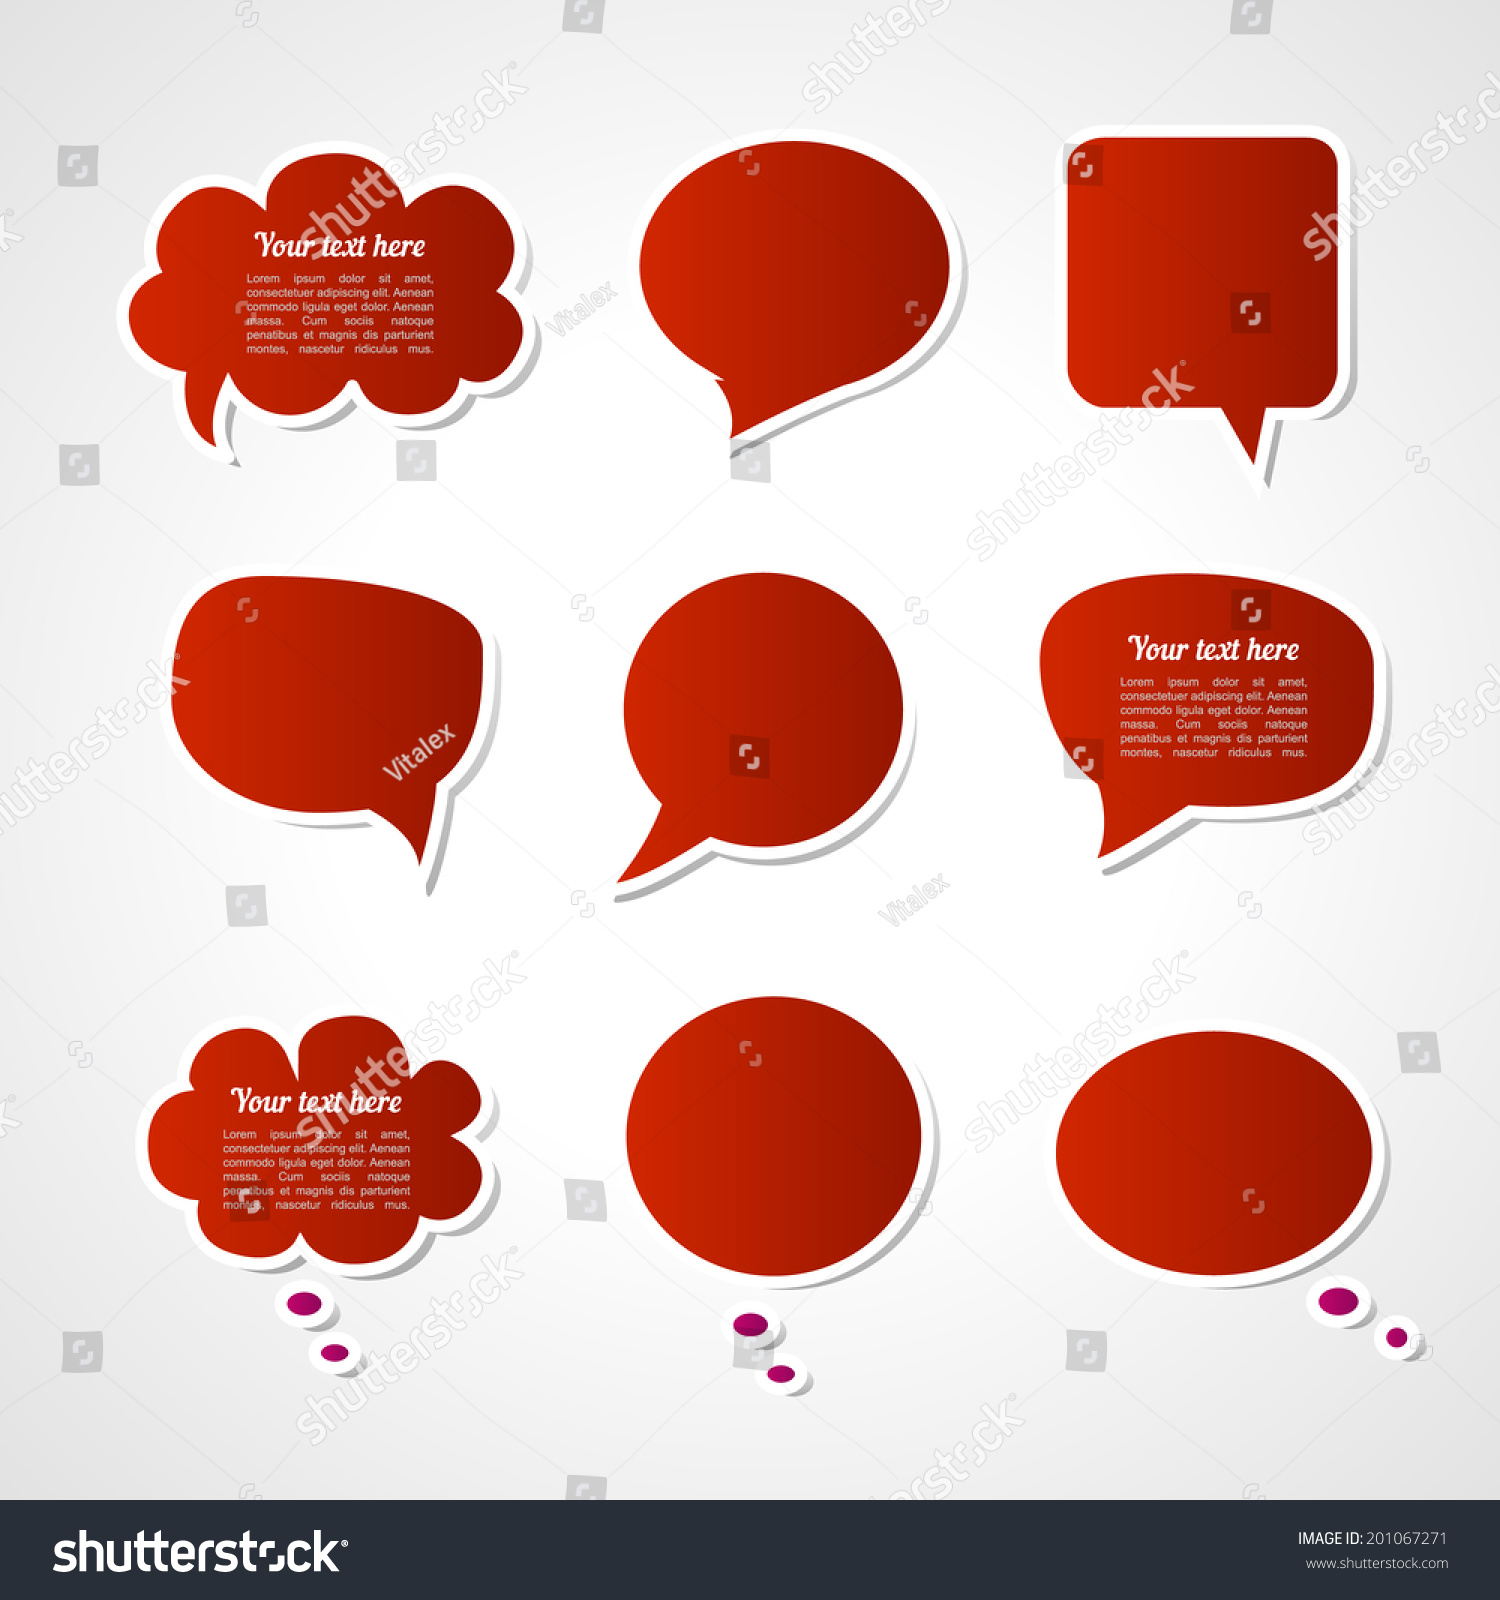 Dialogue Cloud. Vector Illustration - 201067271 : Shutterstock